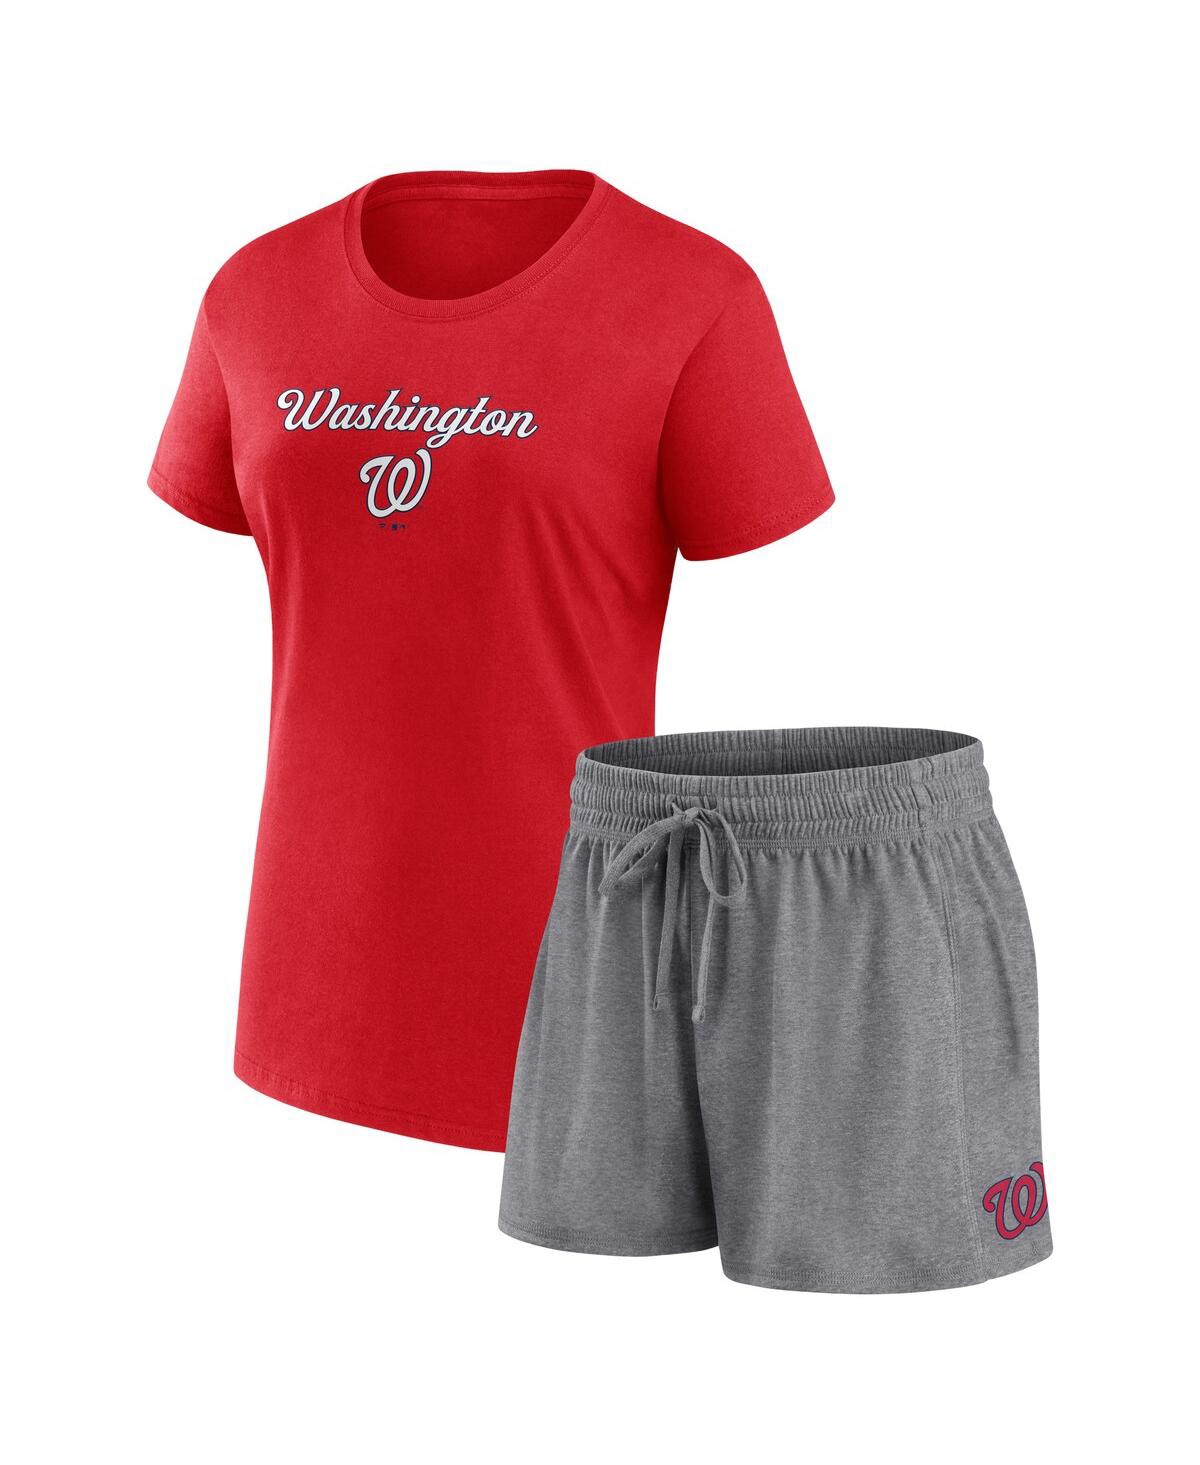 Women's Fanatics Red, Gray Washington Nationals Script T-shirt and Shorts Combo Set - Red, Gray